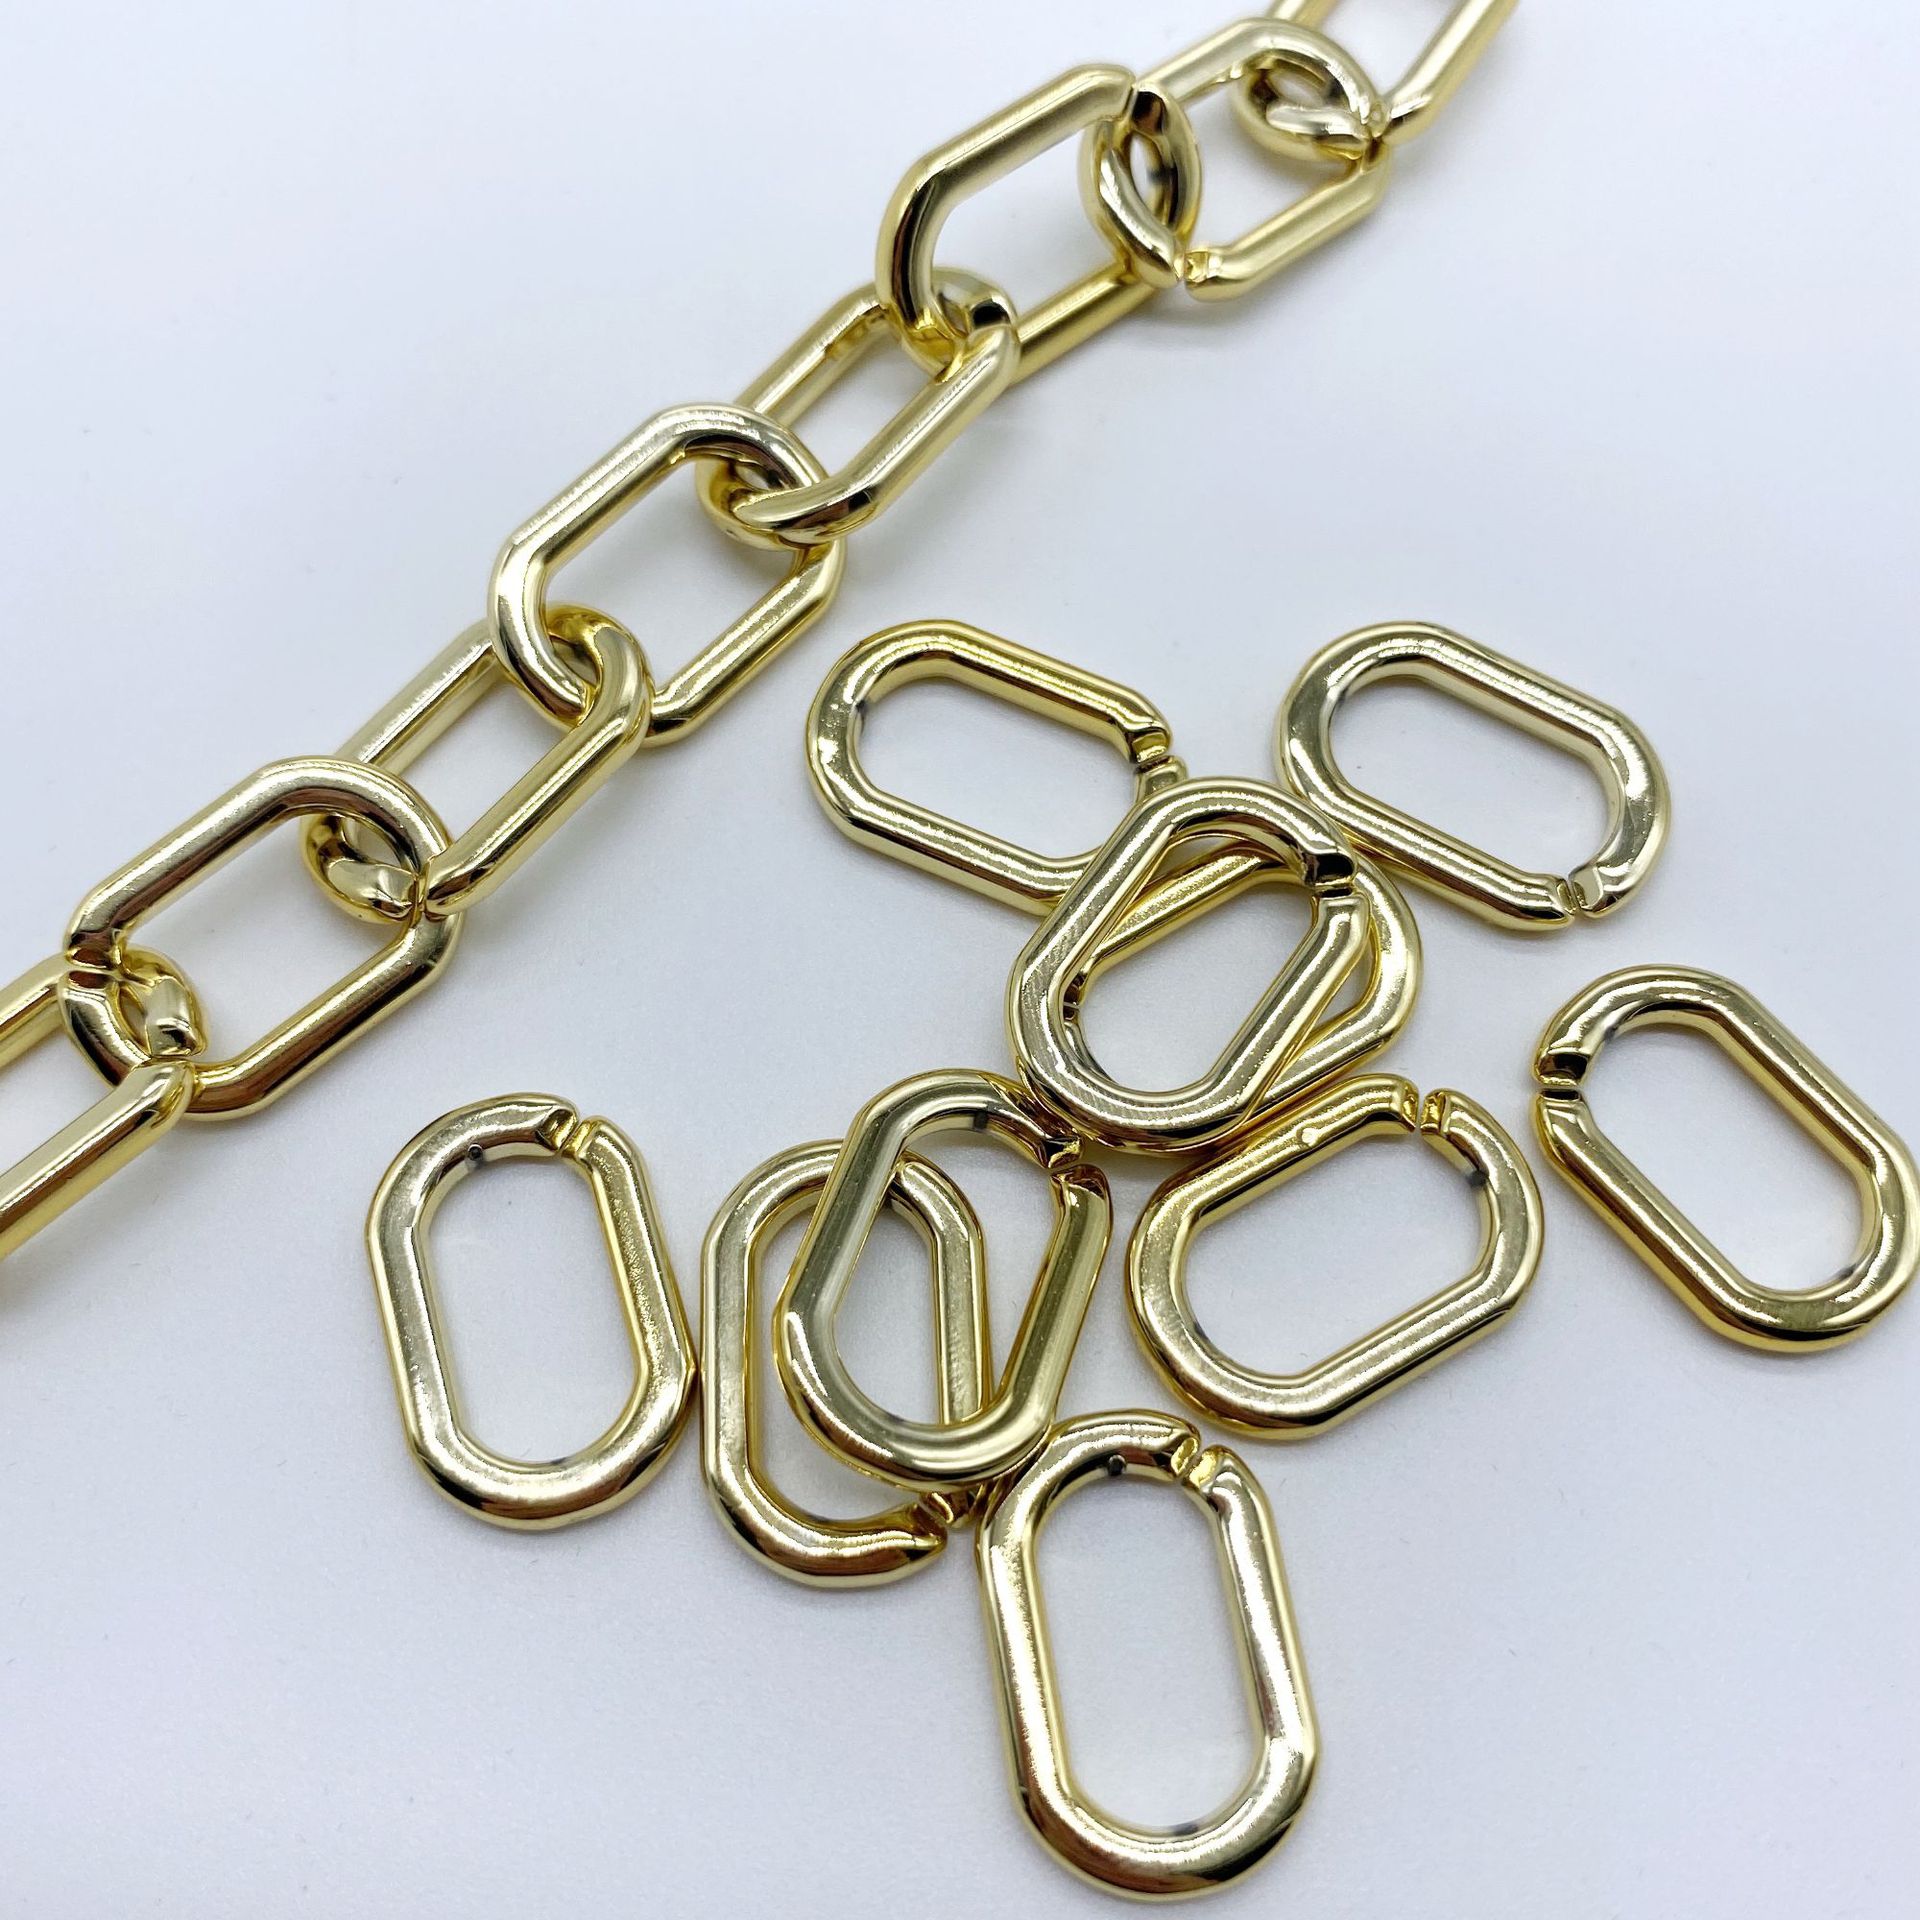 kc gold chain, 11x19mm